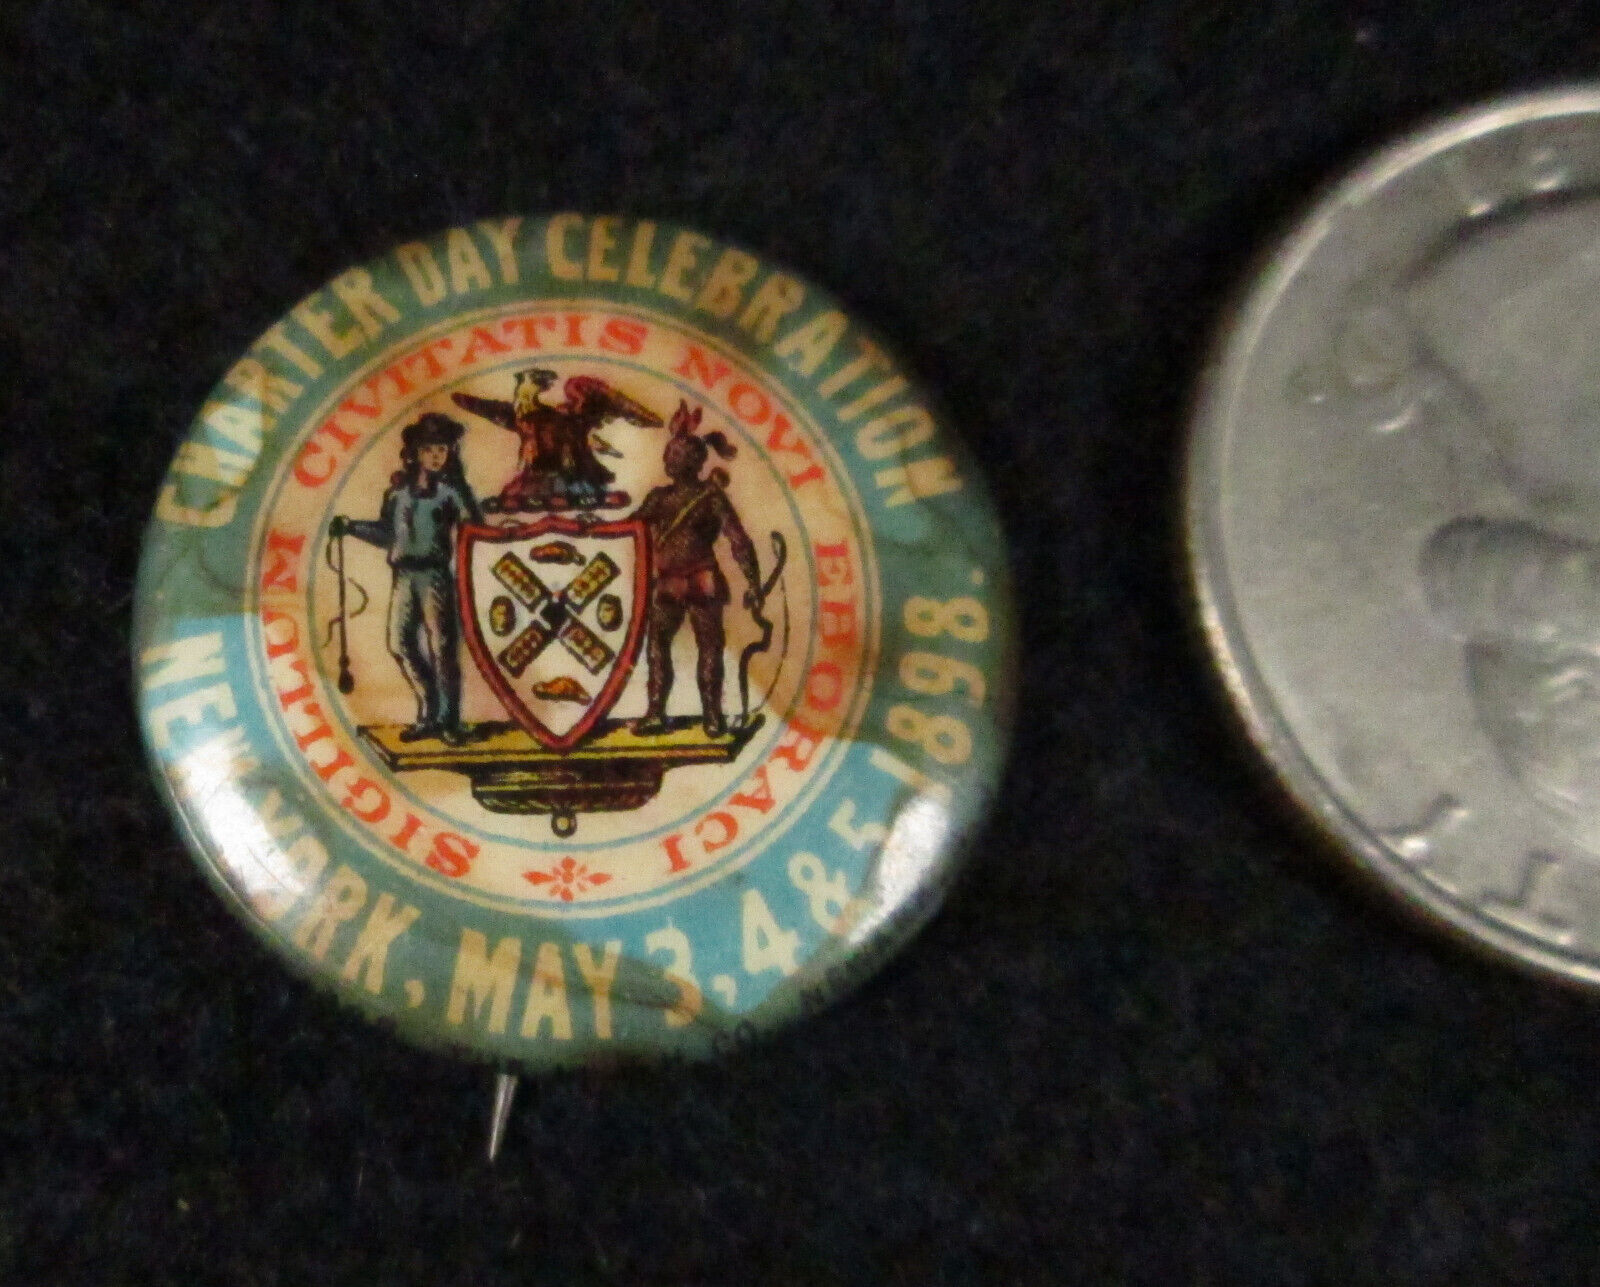 Antique 1898 Whitehead & Hoag New York City Charter Day Celebration Lapel Button